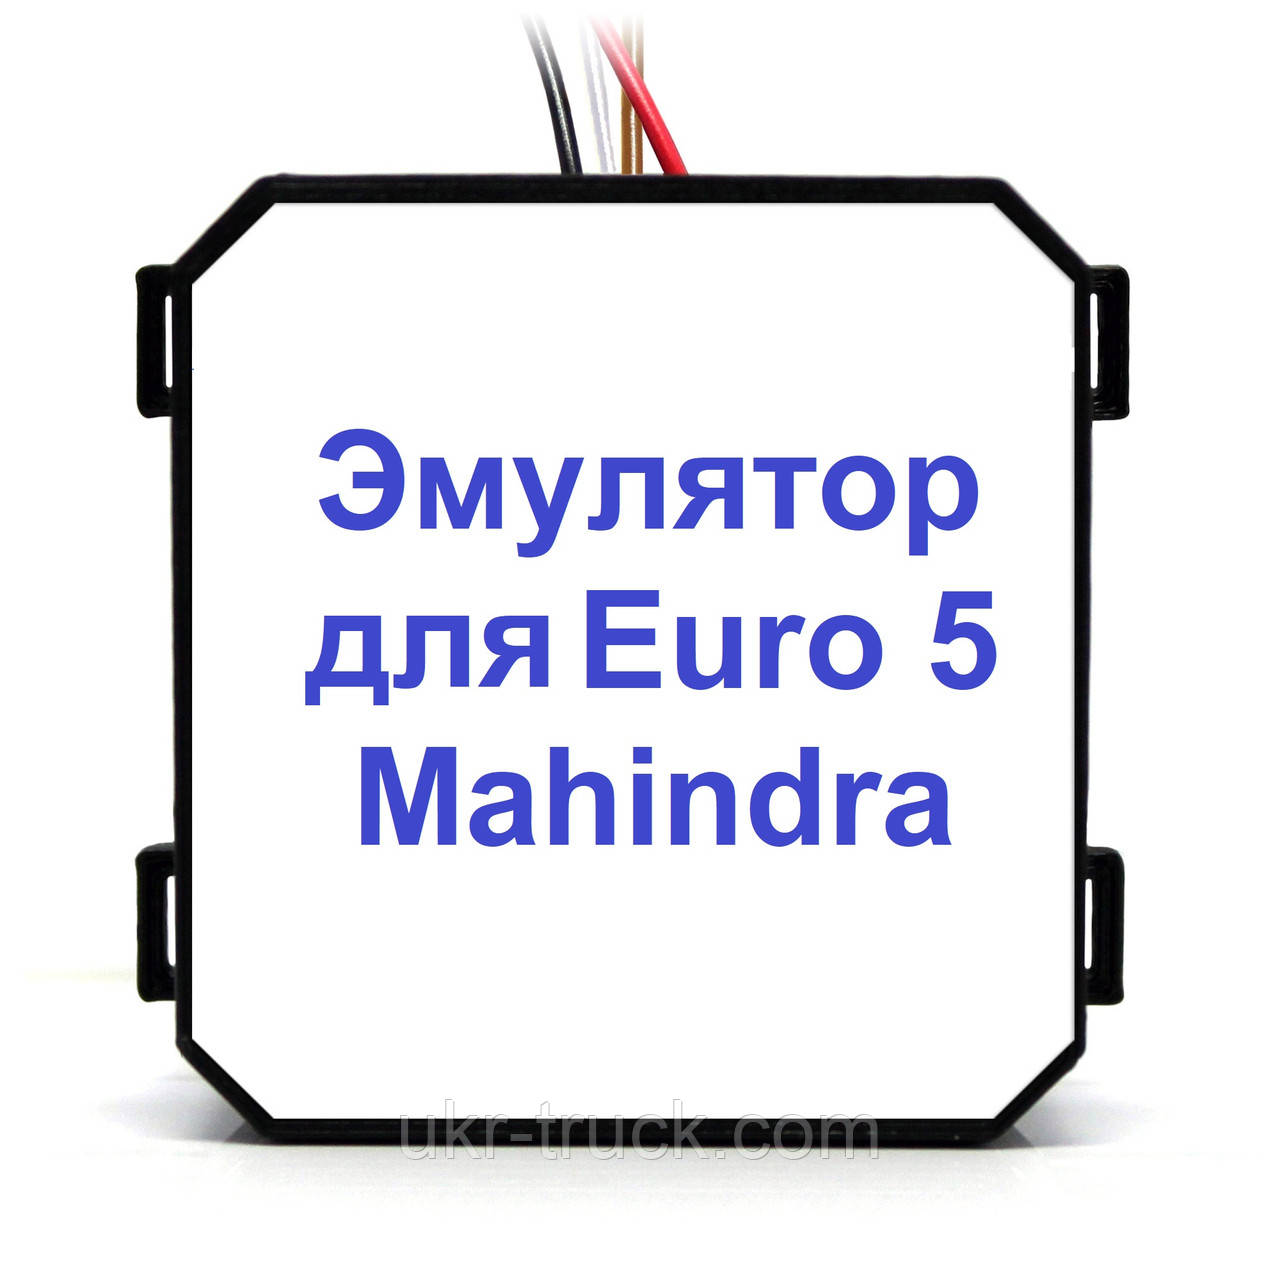 Емулятор видалення Adblue Mahindra Euro 5